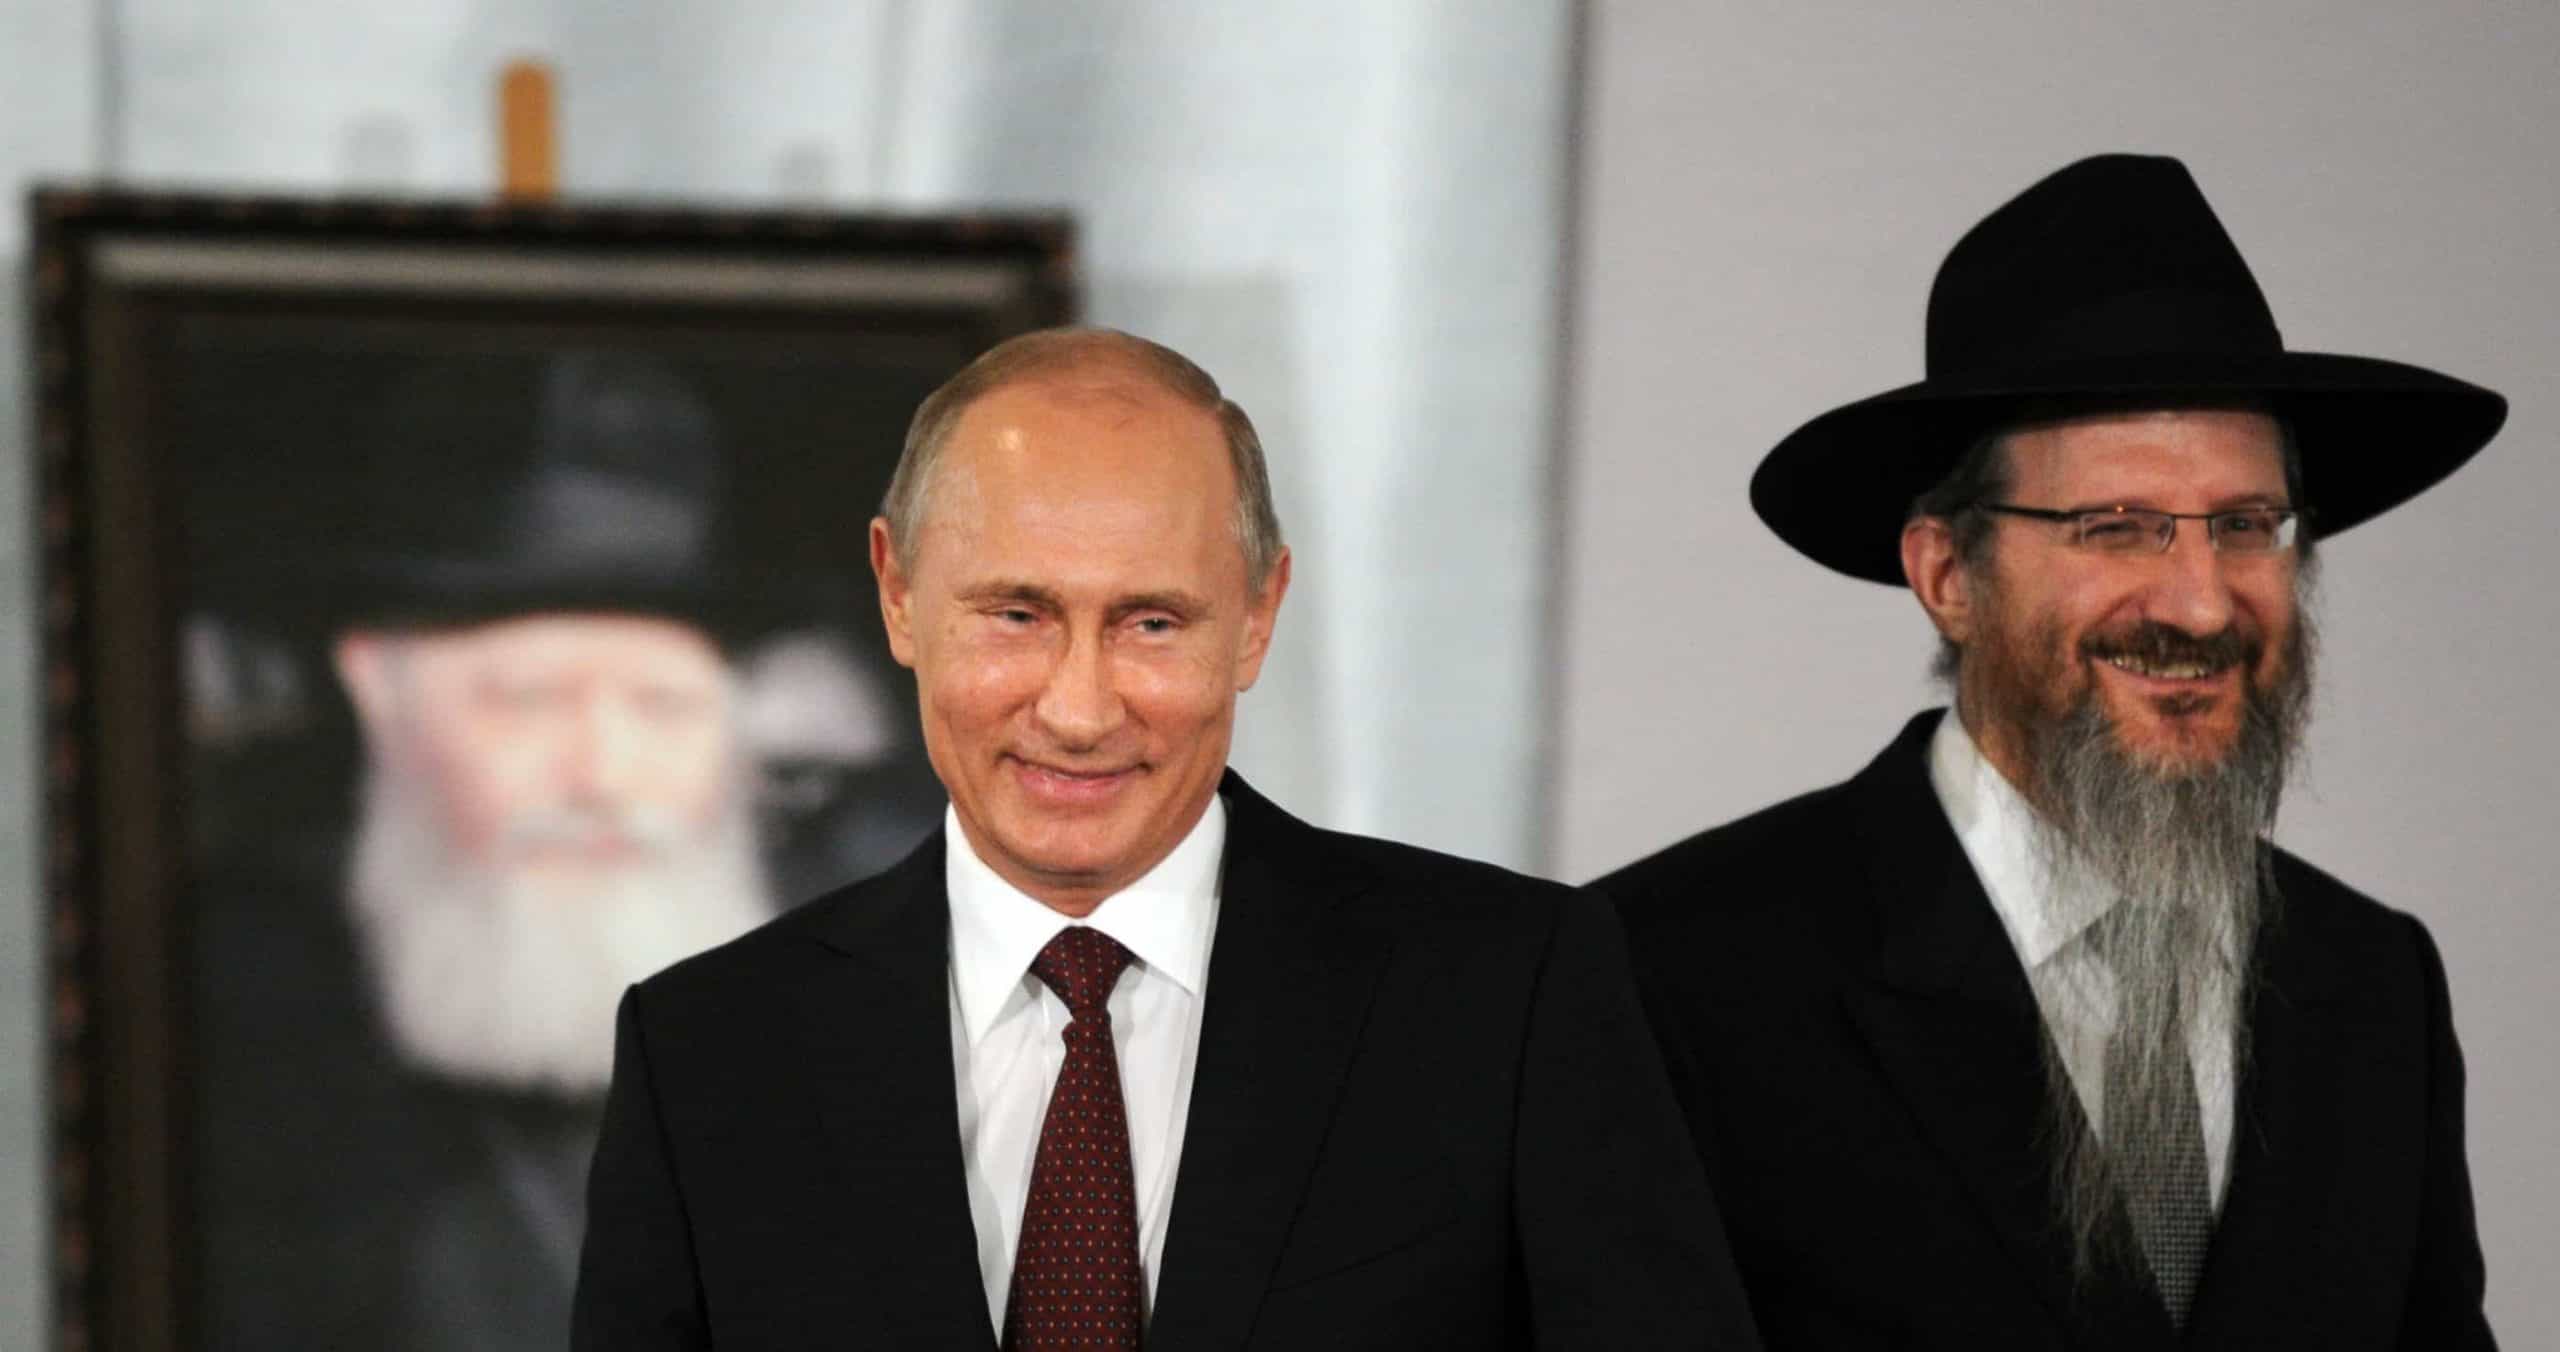 Putin Refers to Torah as Basis of His Values